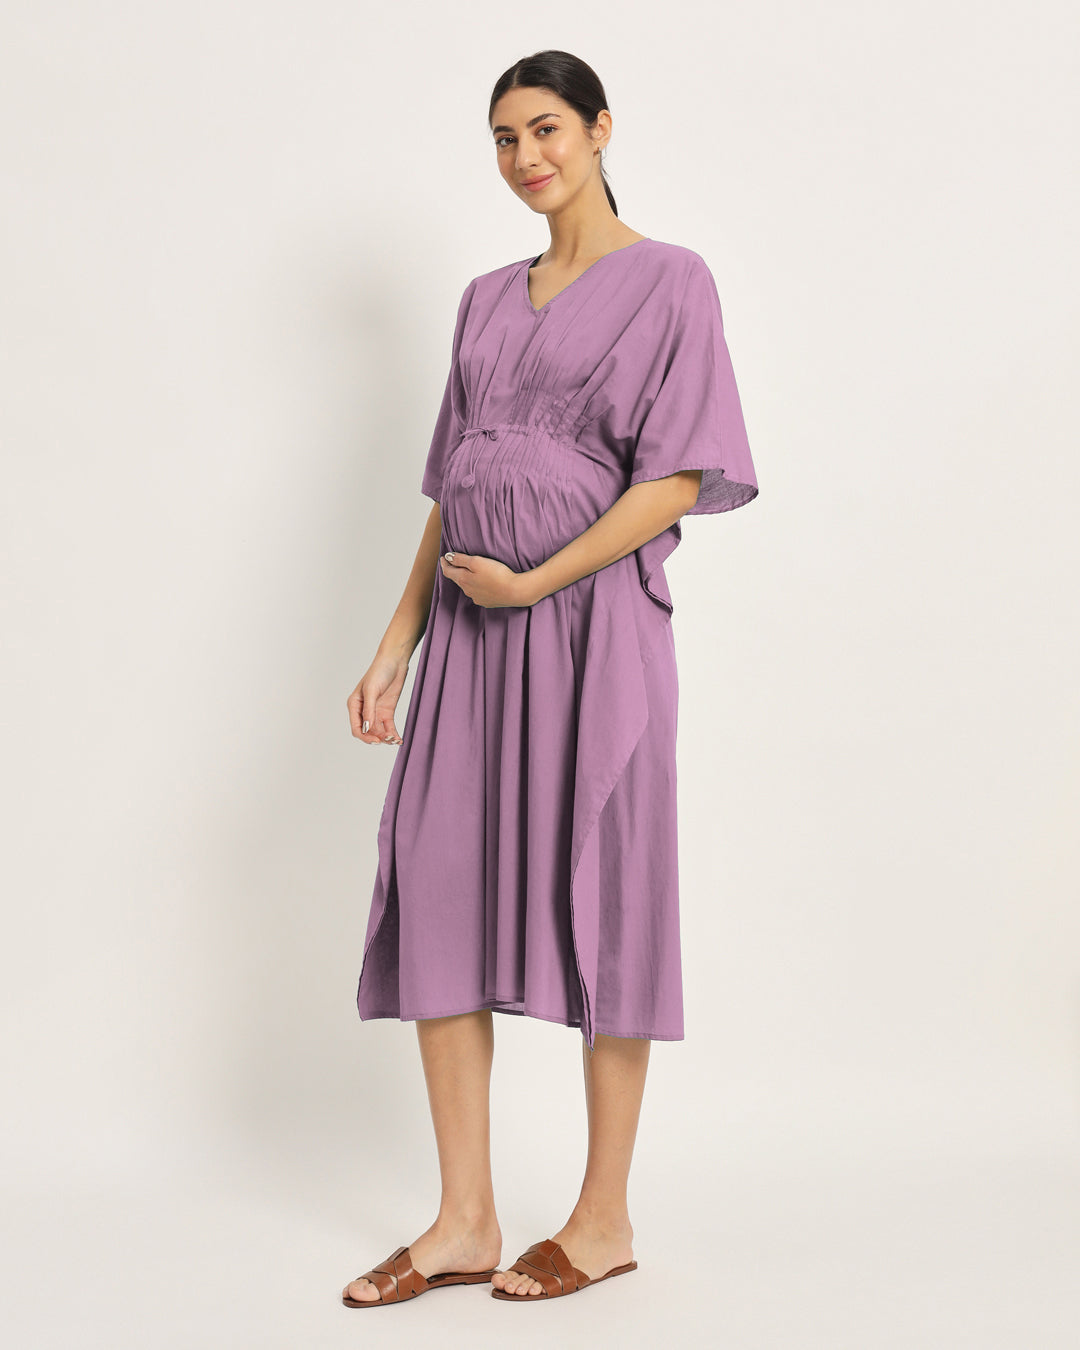 Combo: Iris Pink & Russet Red Mommy Mode Maternity & Nursing Dress